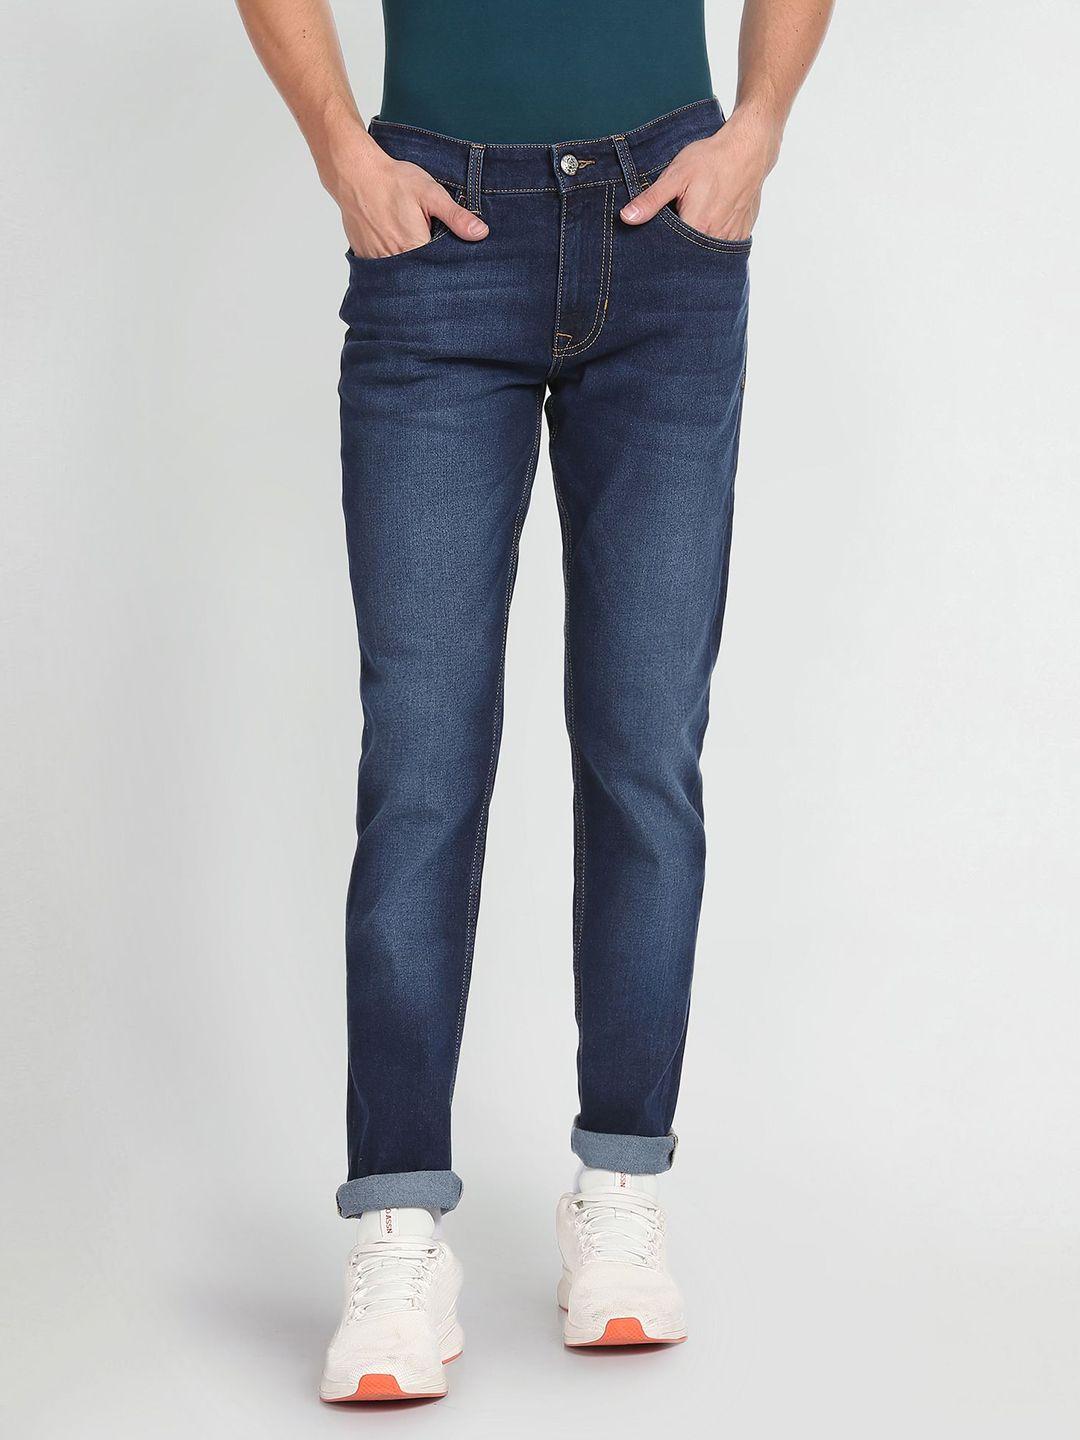 u.s. polo assn. denim co. men blue slim fit light fade jeans